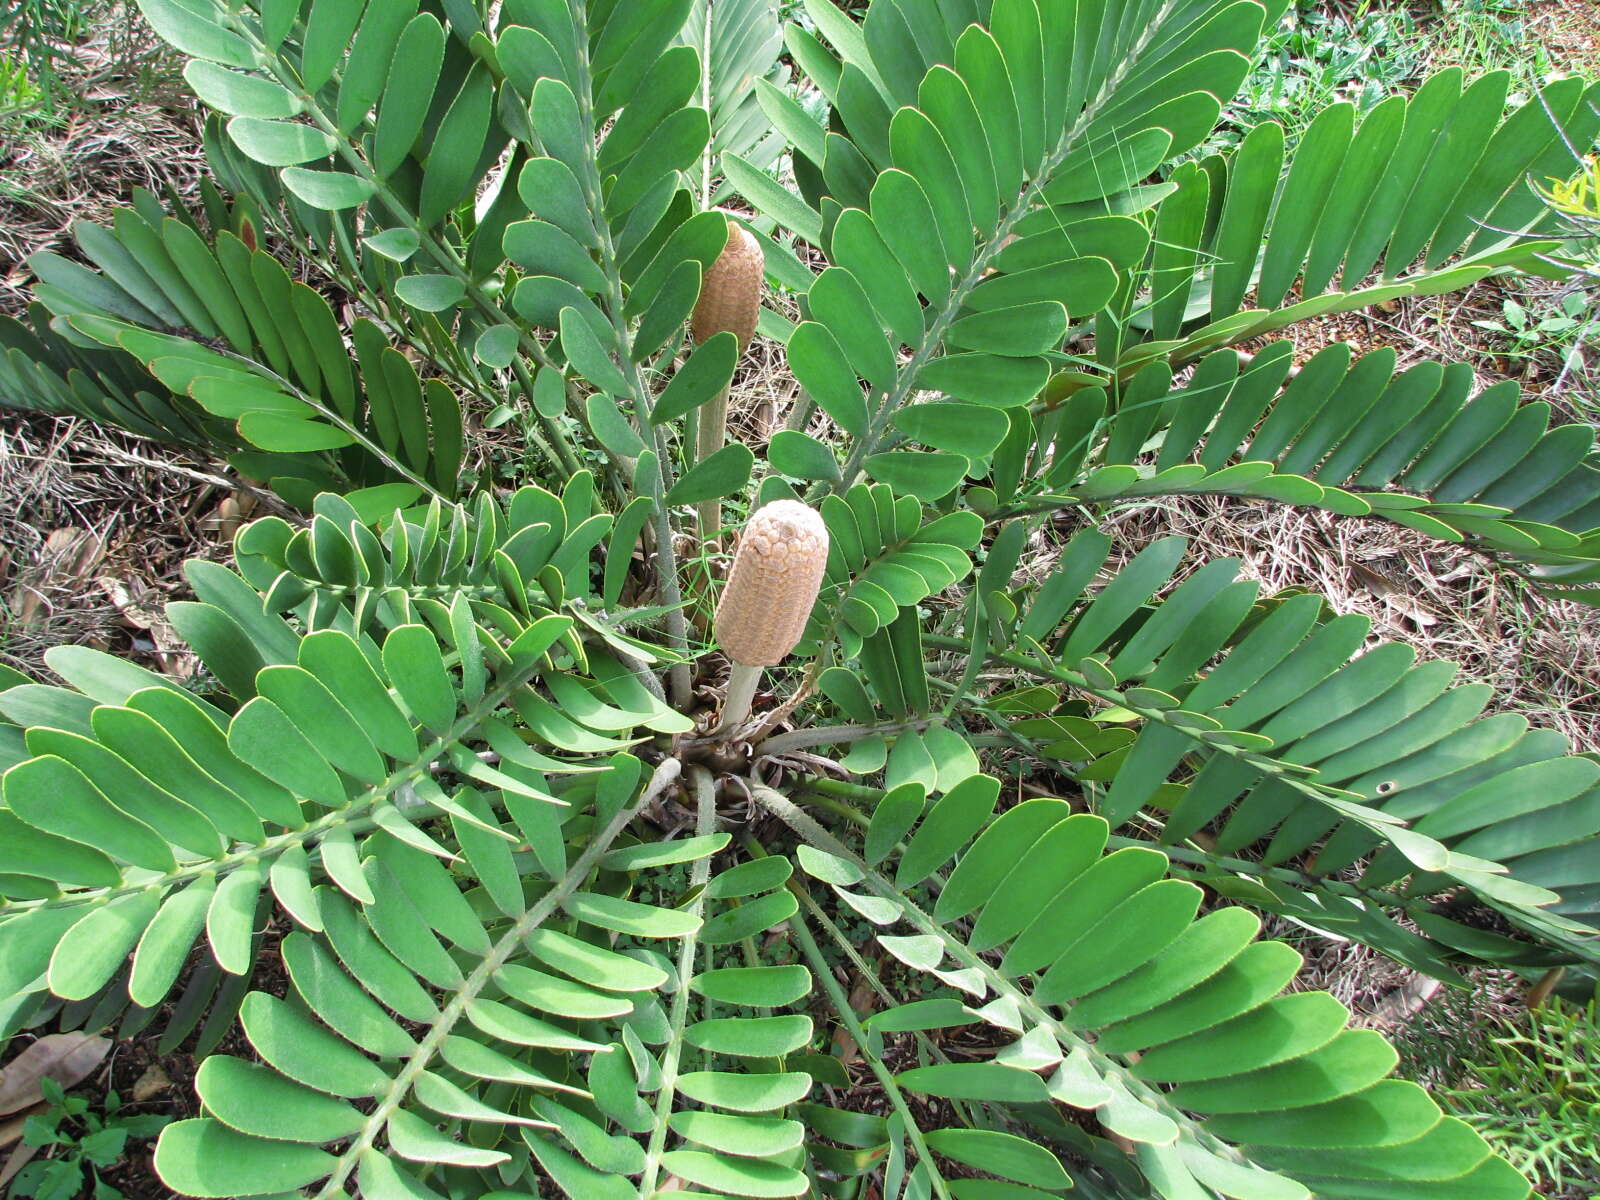 Image of Cardboard Palm